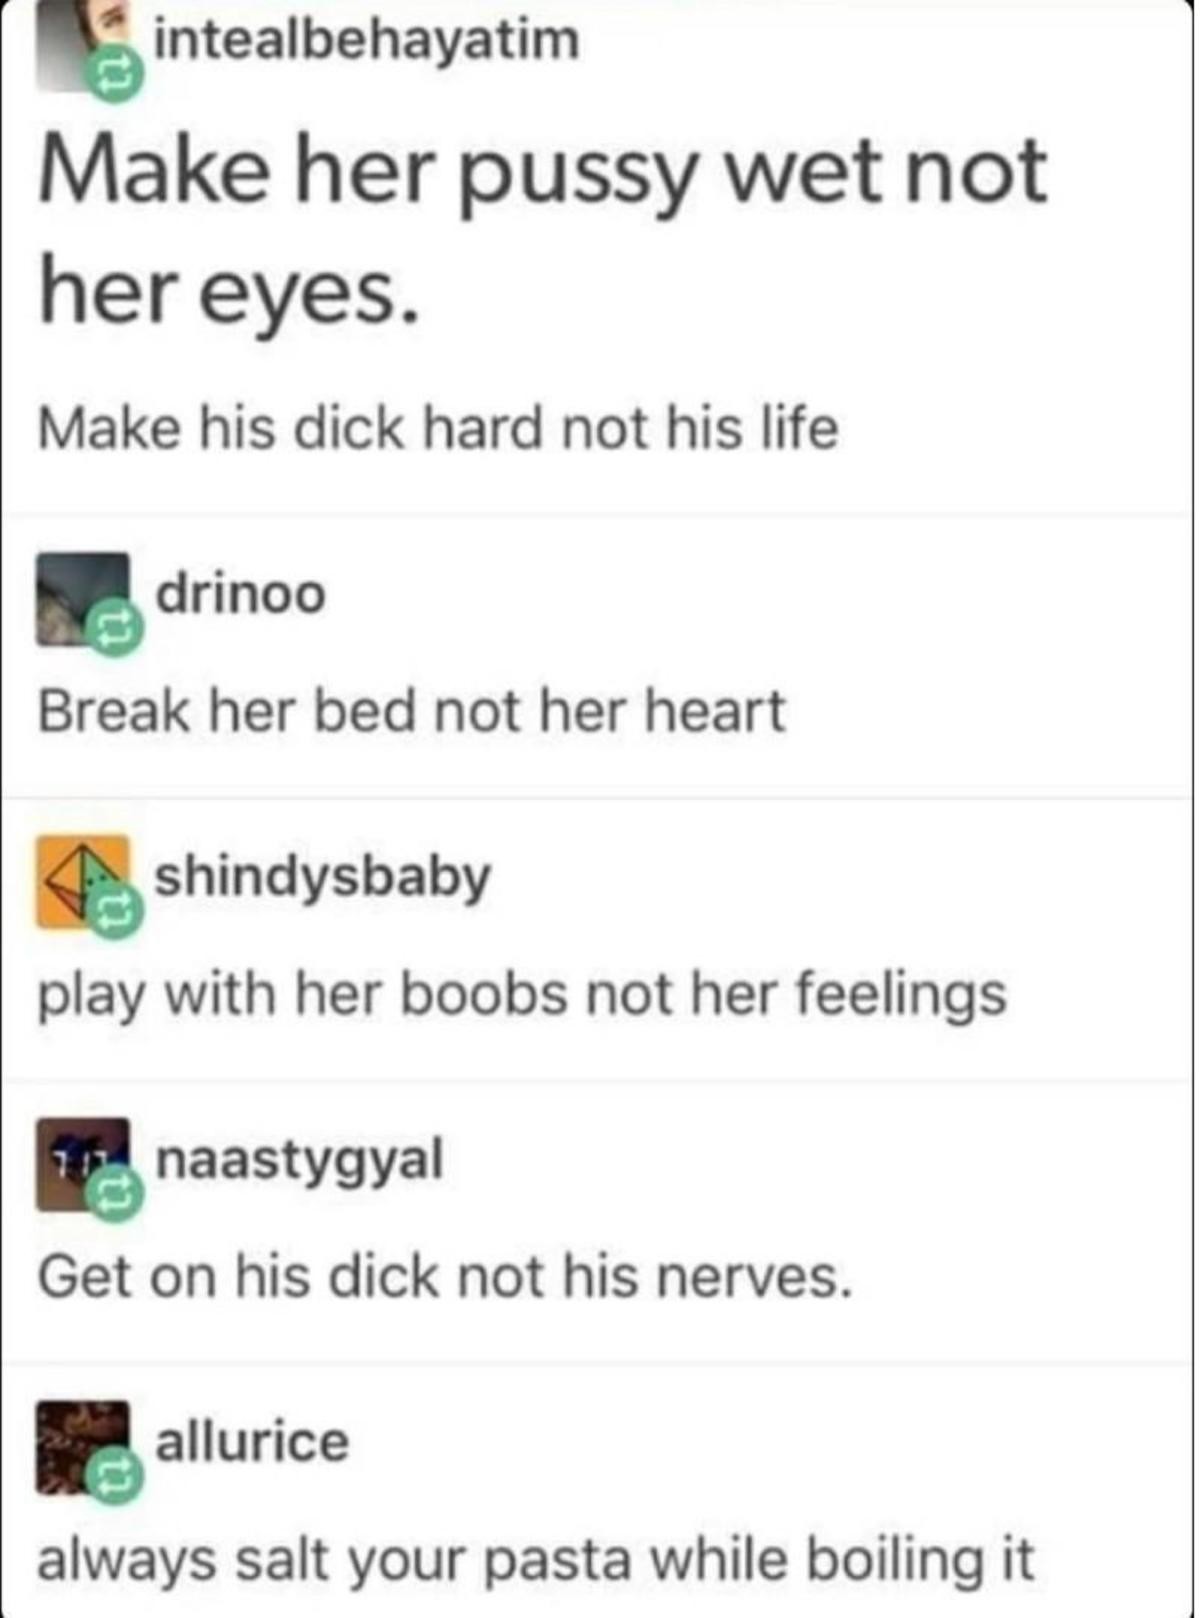 She made his dick hard